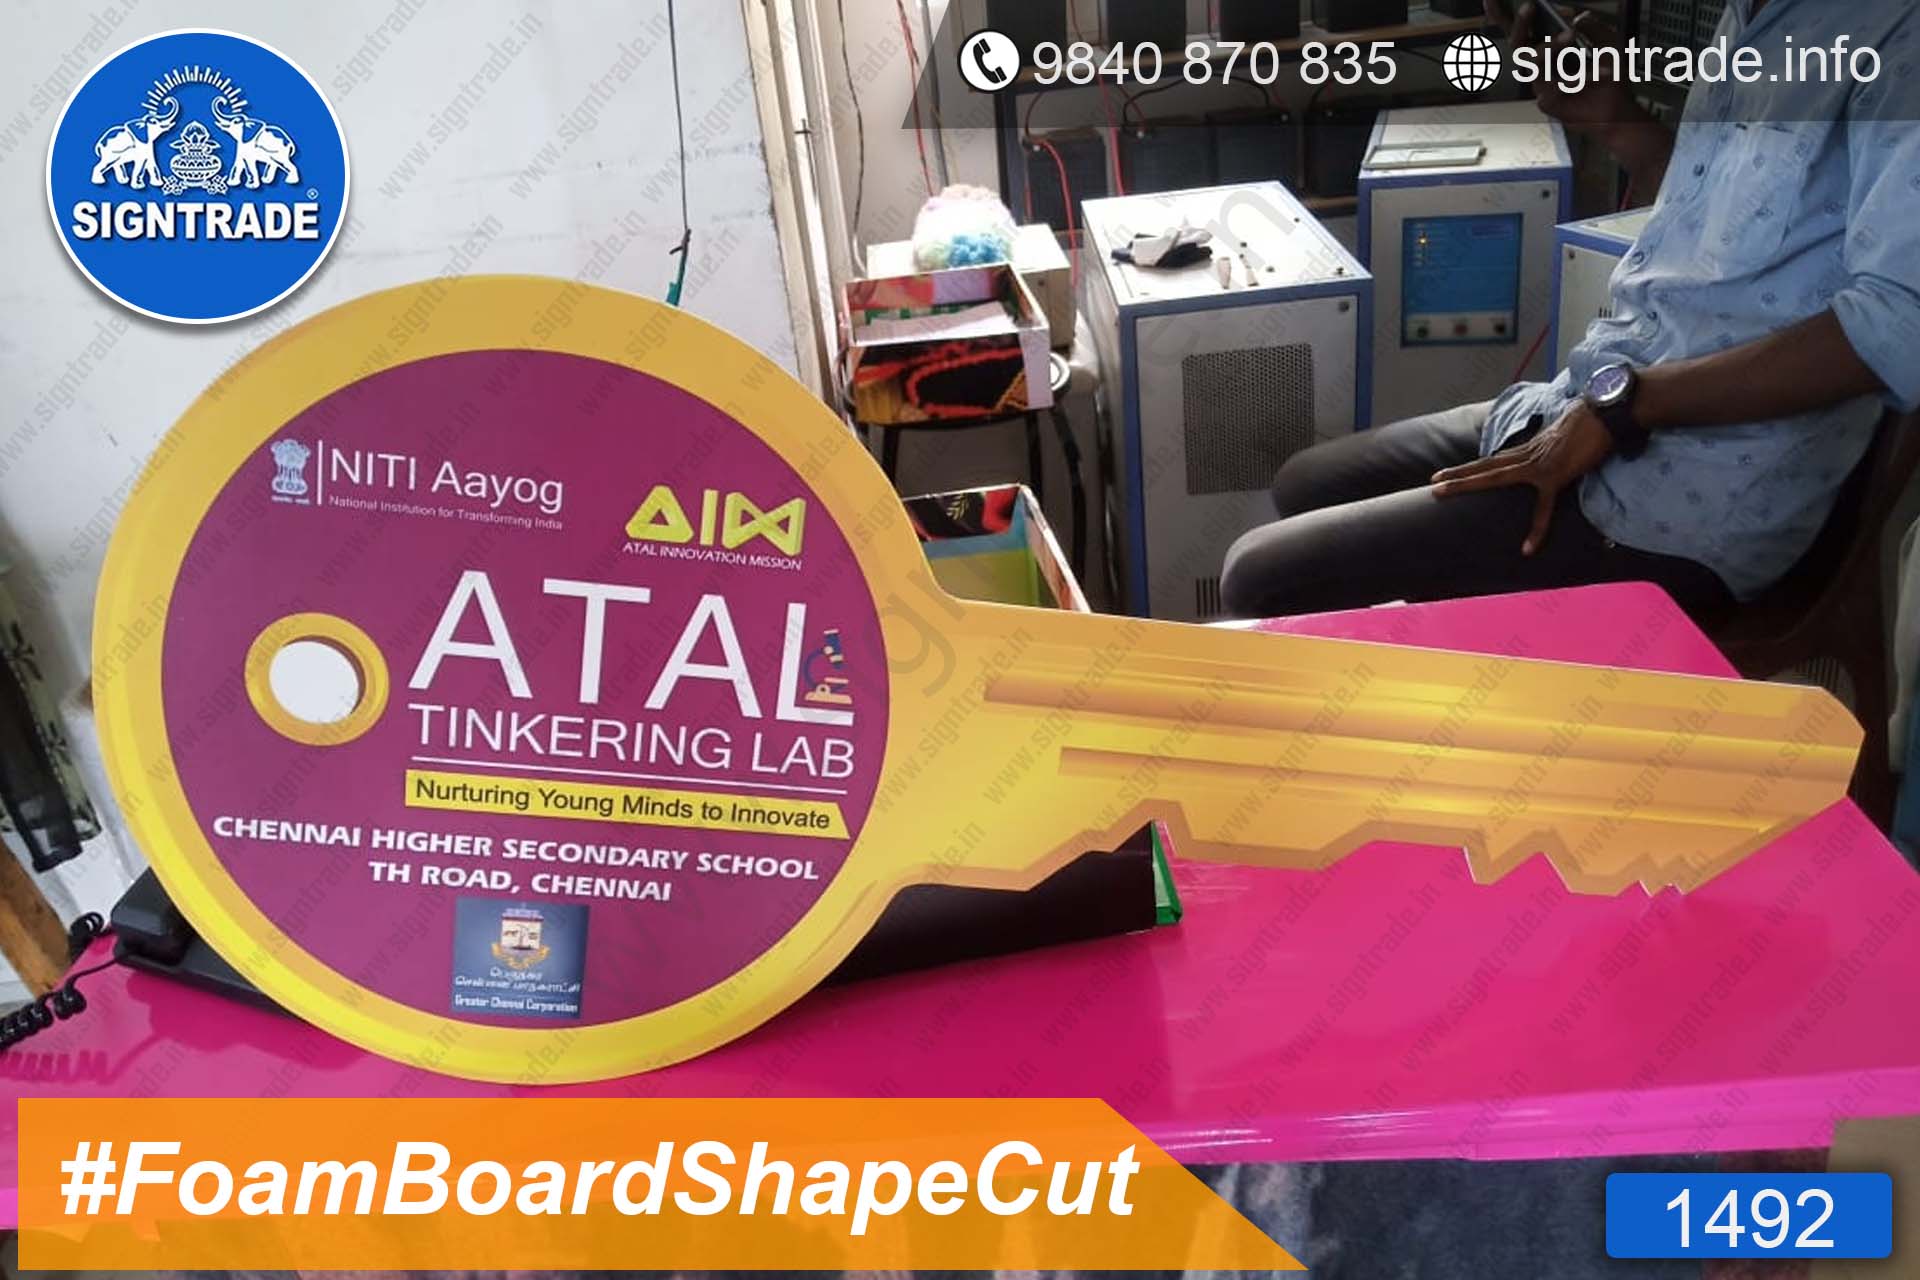 1492, Atal Tinkering Lab - Chennai - SIGNTRADE - Foam Board Shape Cut, Foam Board Promotional Cutout Display Stand Manufacturers in Chennai